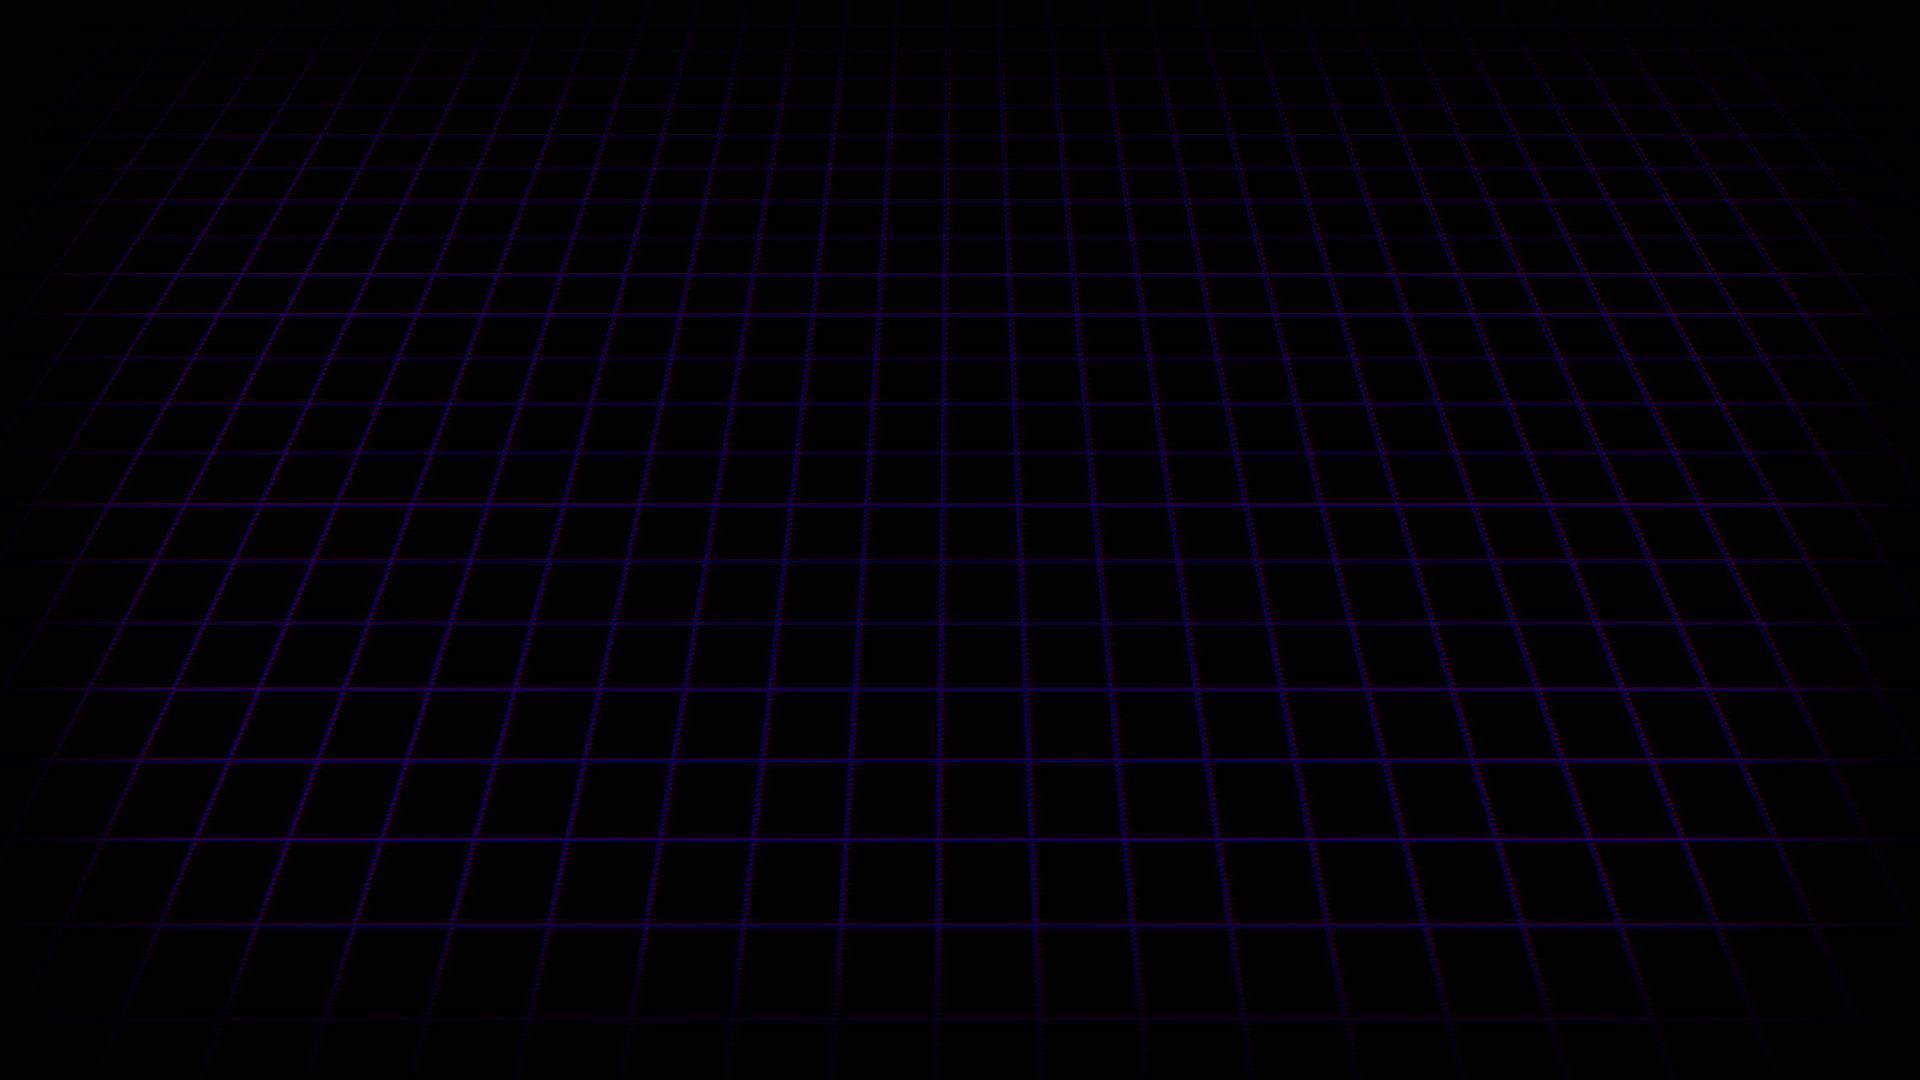 A black and purple grid background - Dark